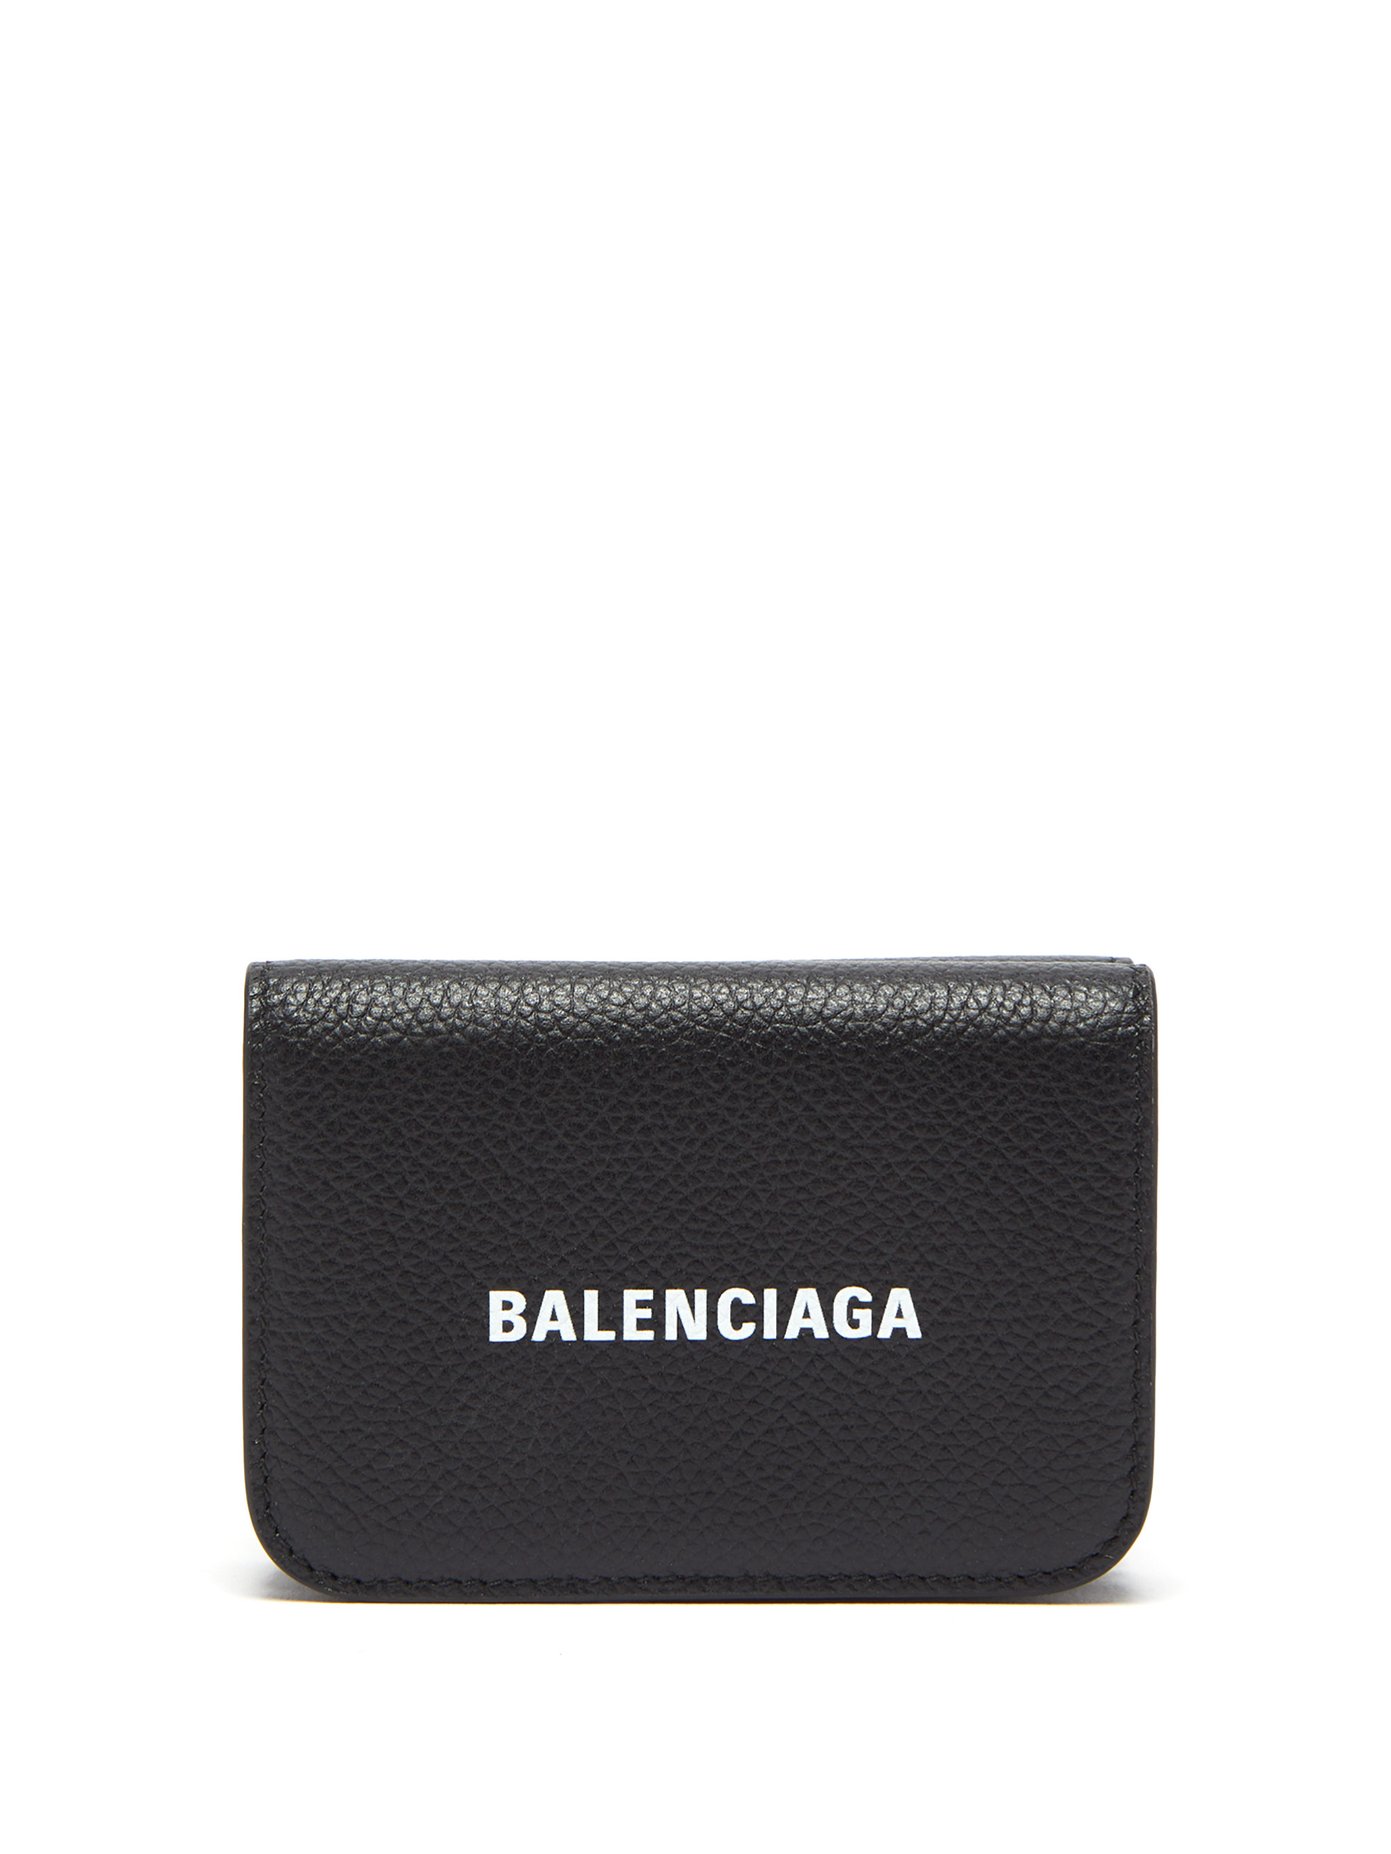 Balenciaga Leather Wallet Sale, 50% OFF | www.hcb.cat